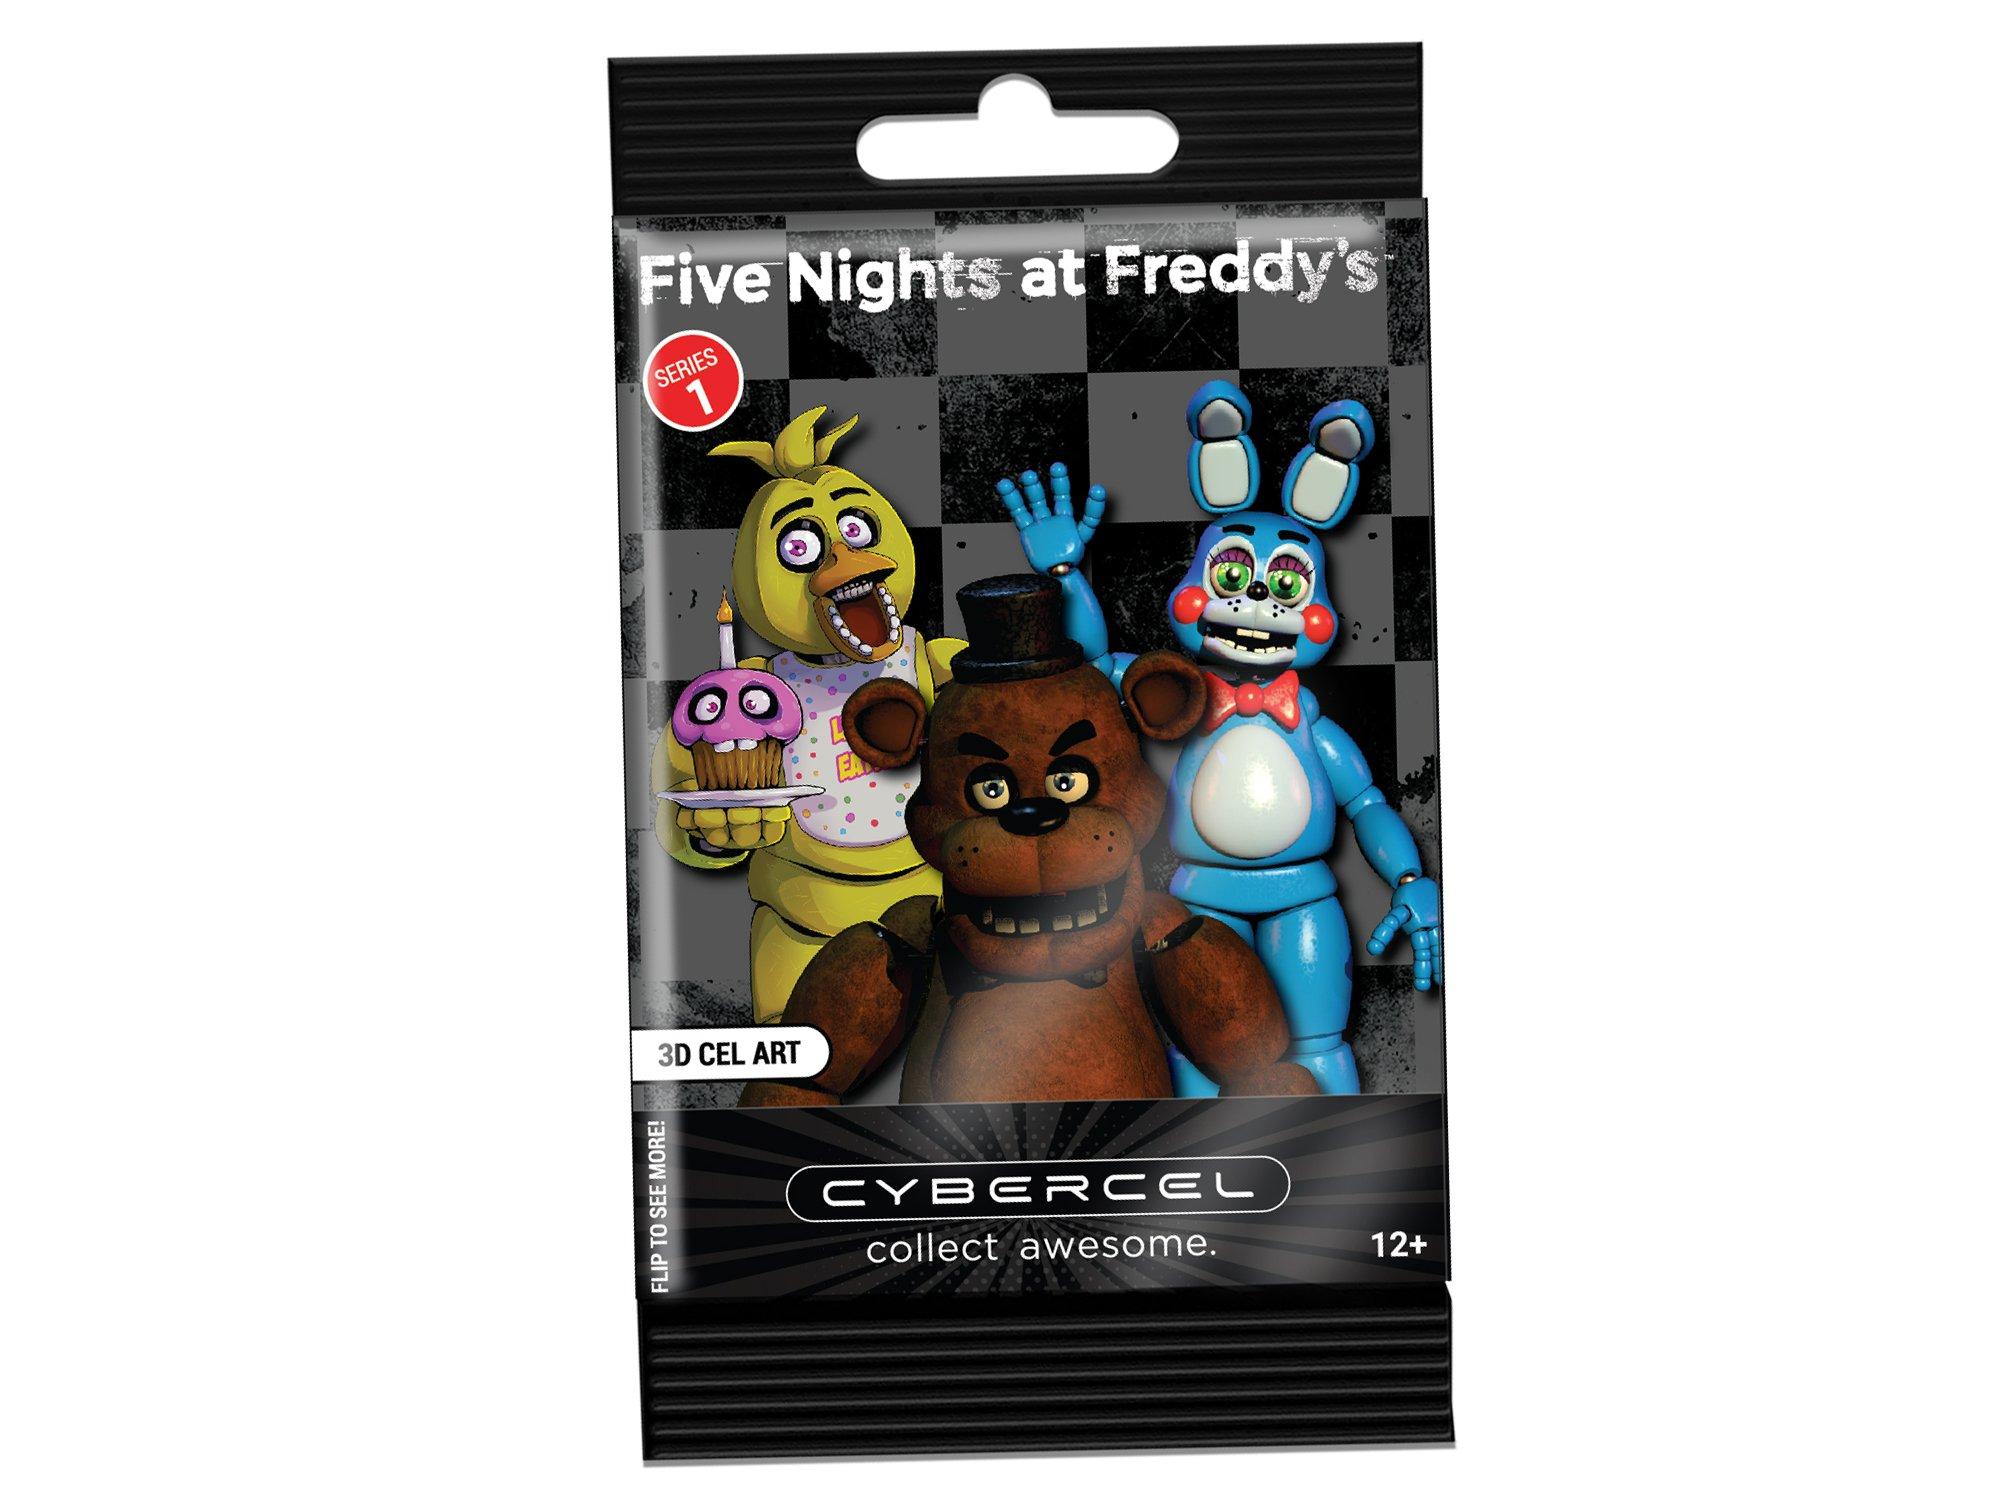 Five Nights at Freddy's height chart  Fnaf characters, Fnaf drawings, Fnaf